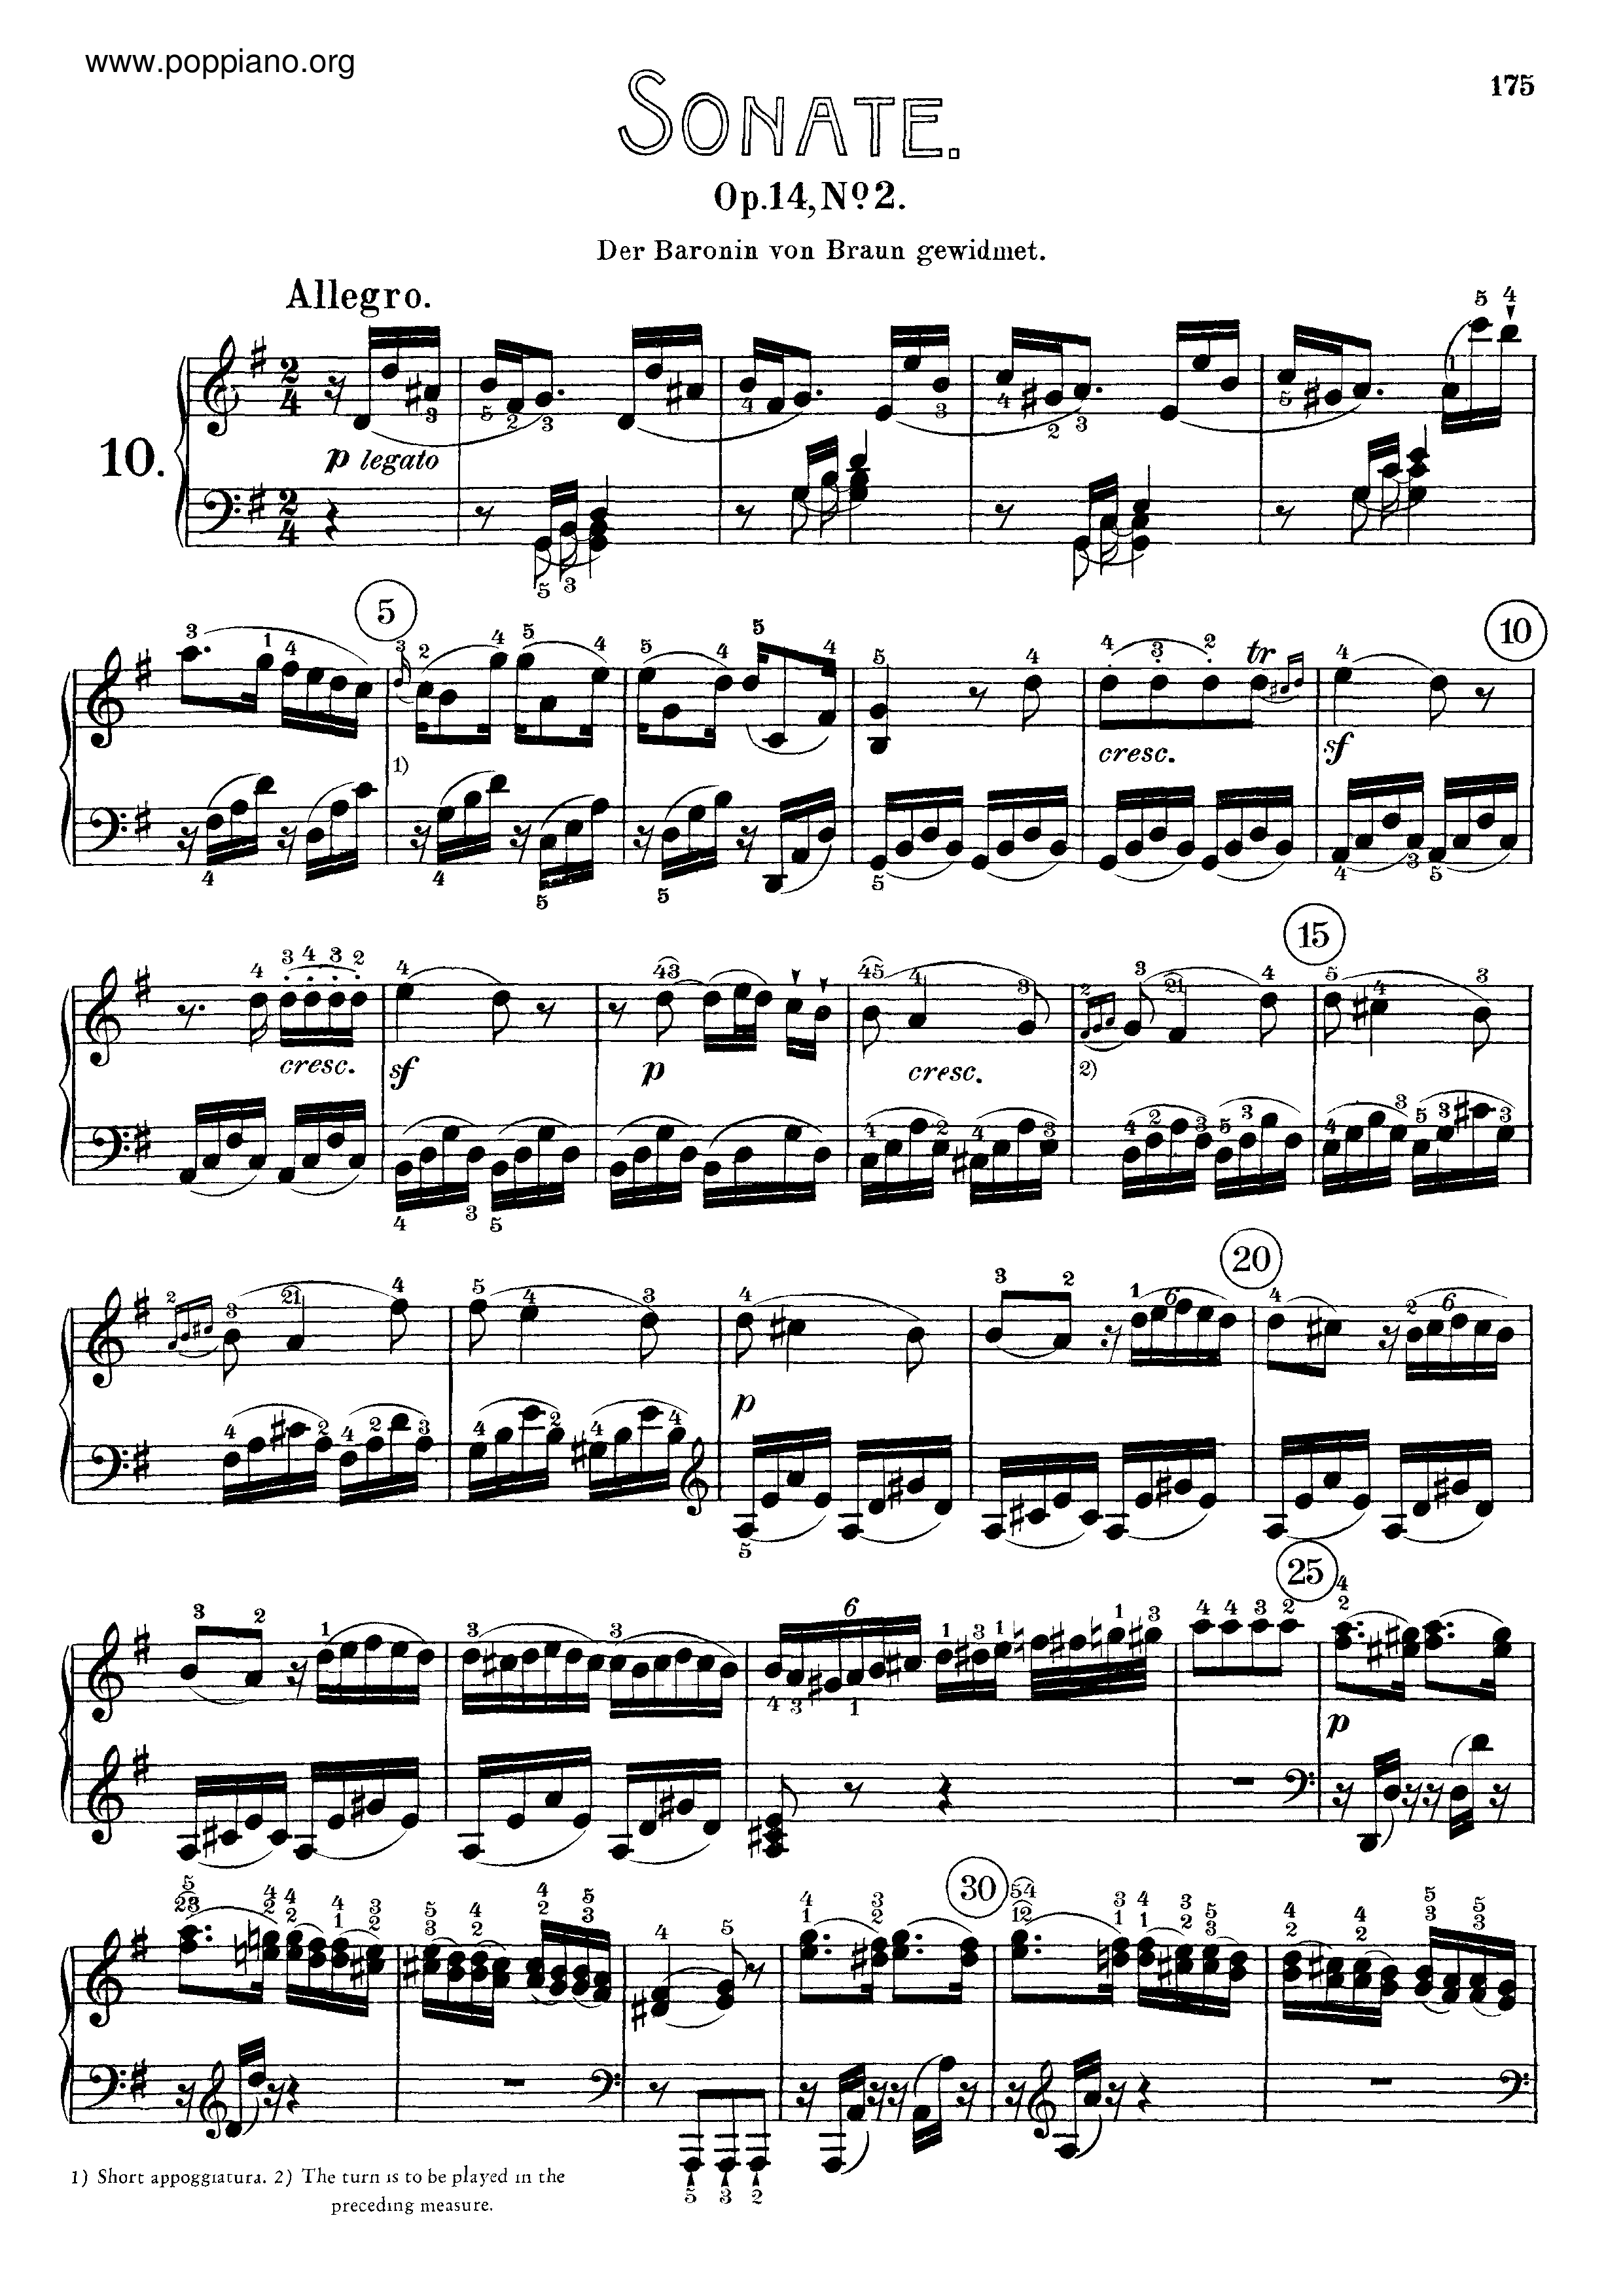 Sonata No. 10 in G majorピアノ譜